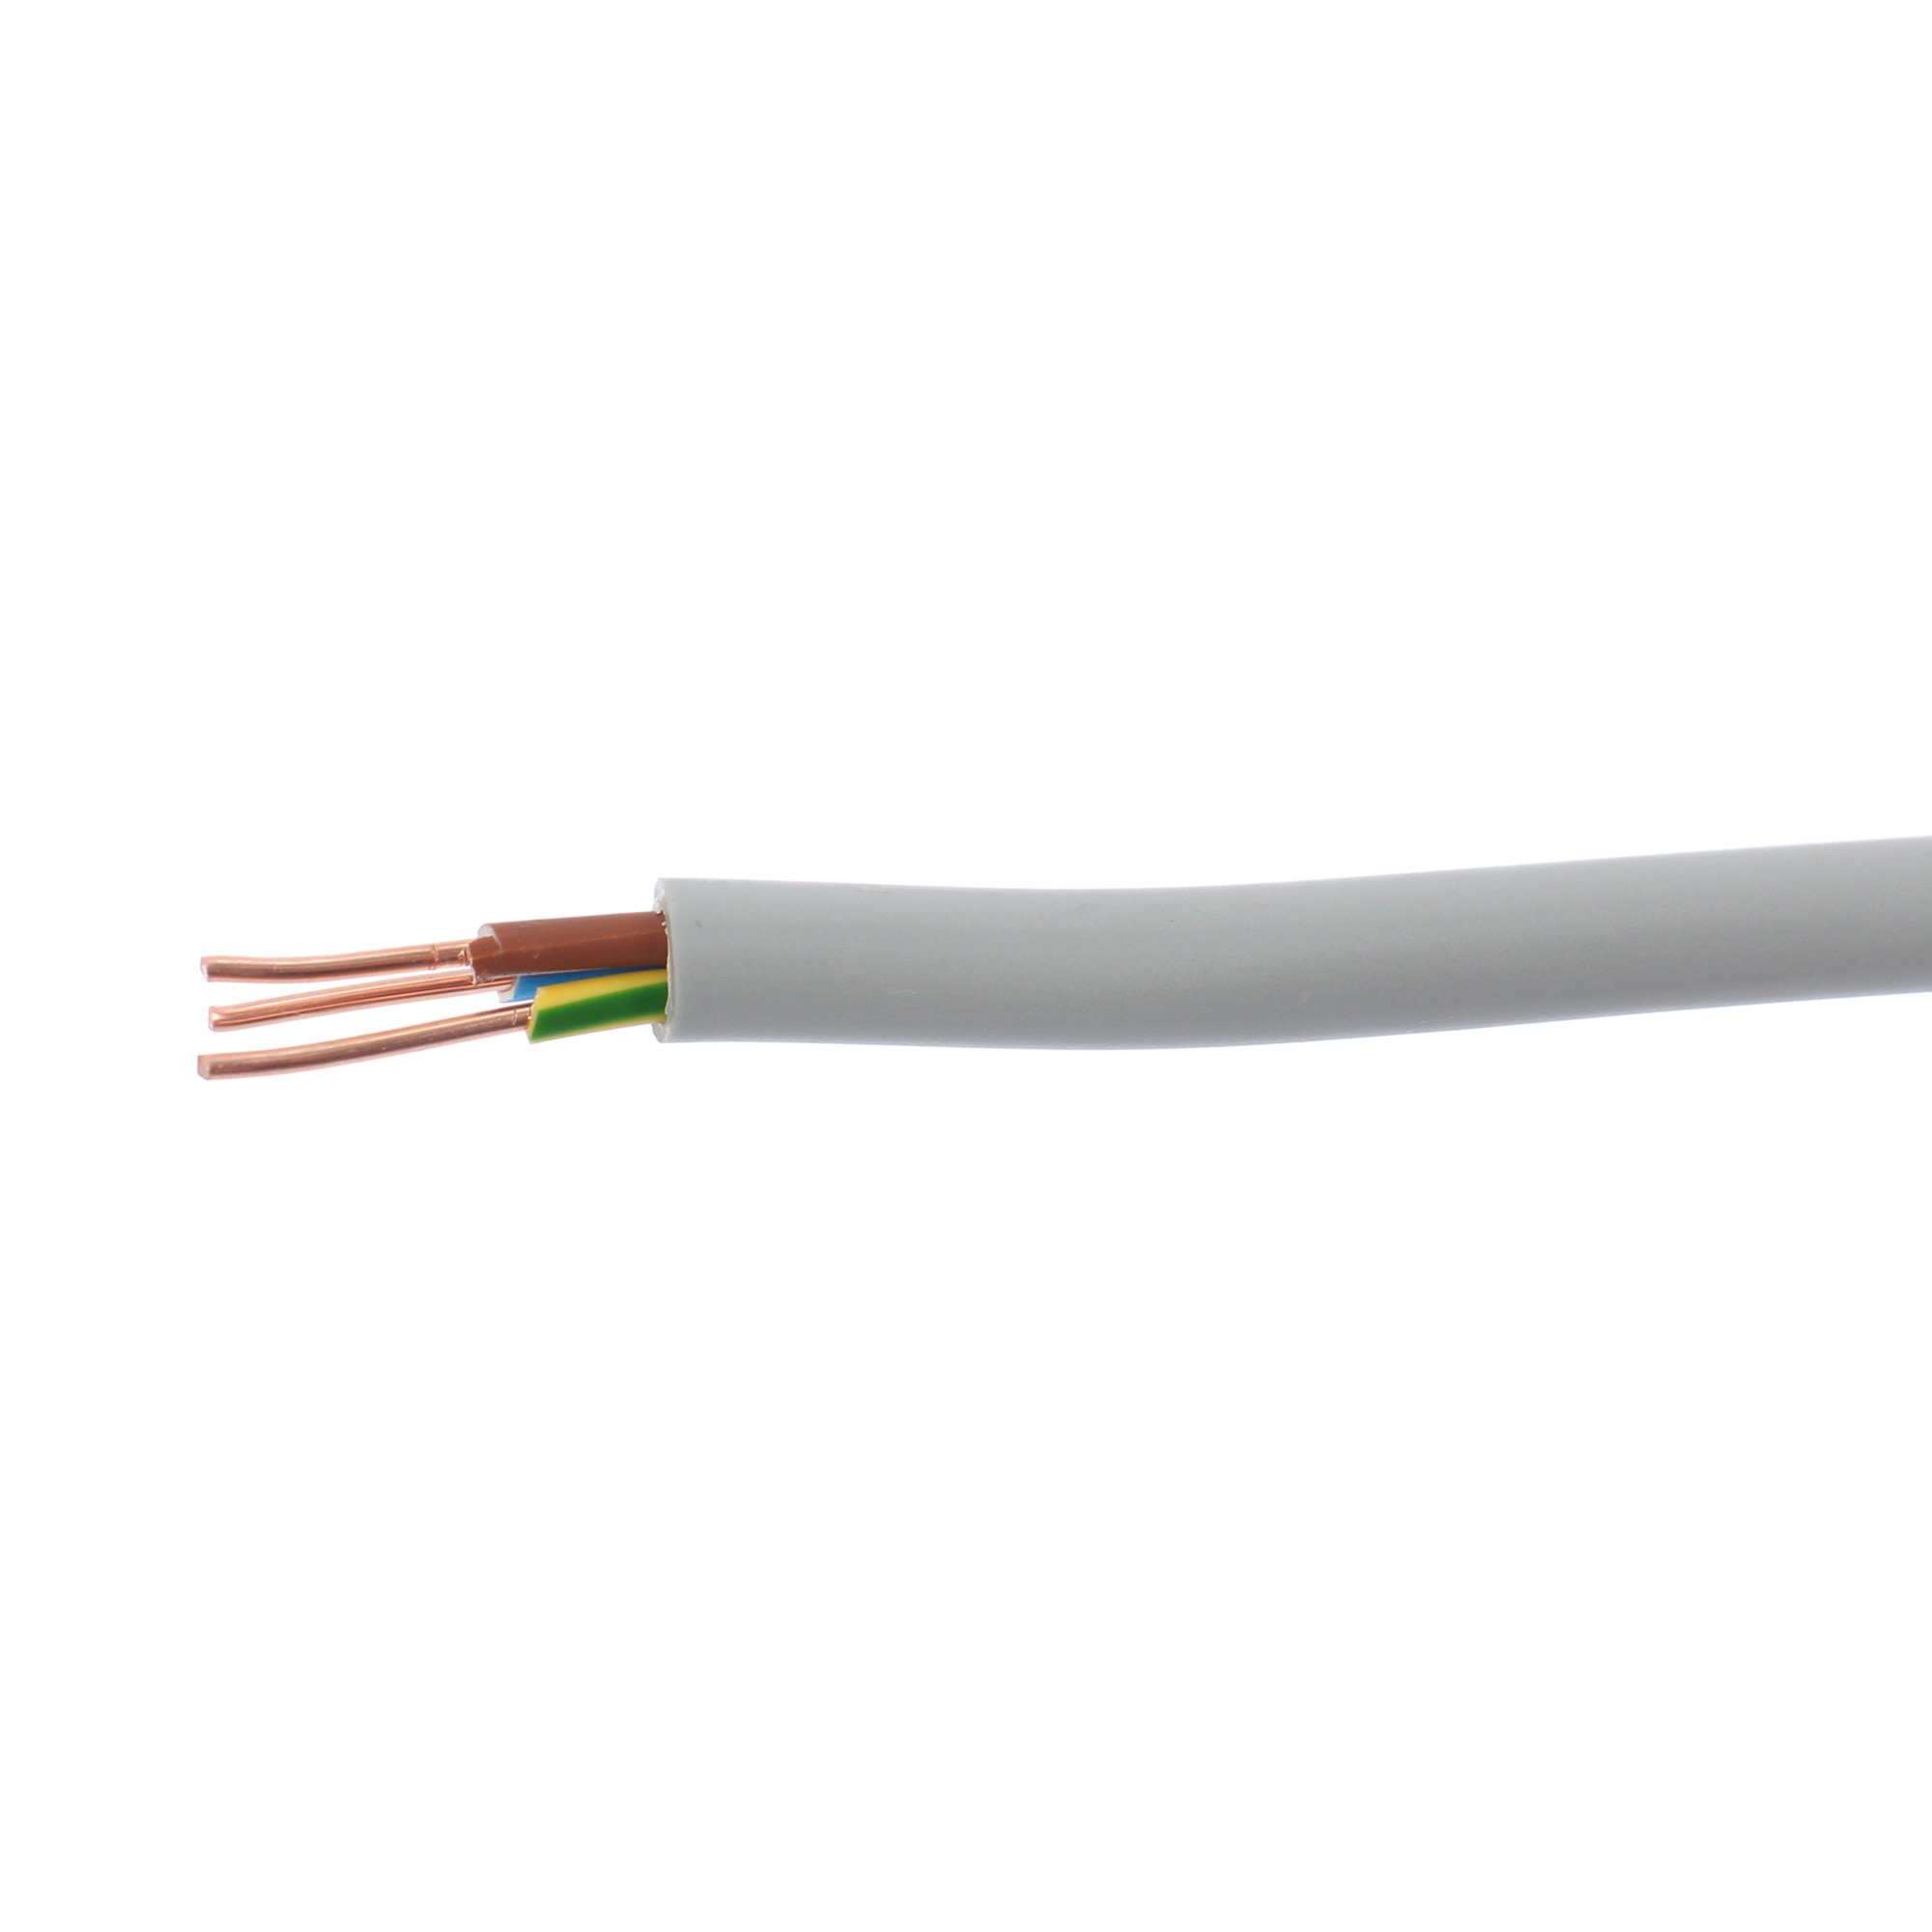 Conductori, cabluri si ghidaje pentru cabluri - Cablu electric CYYF, 3x2.5mm, masiv, bilden.ro